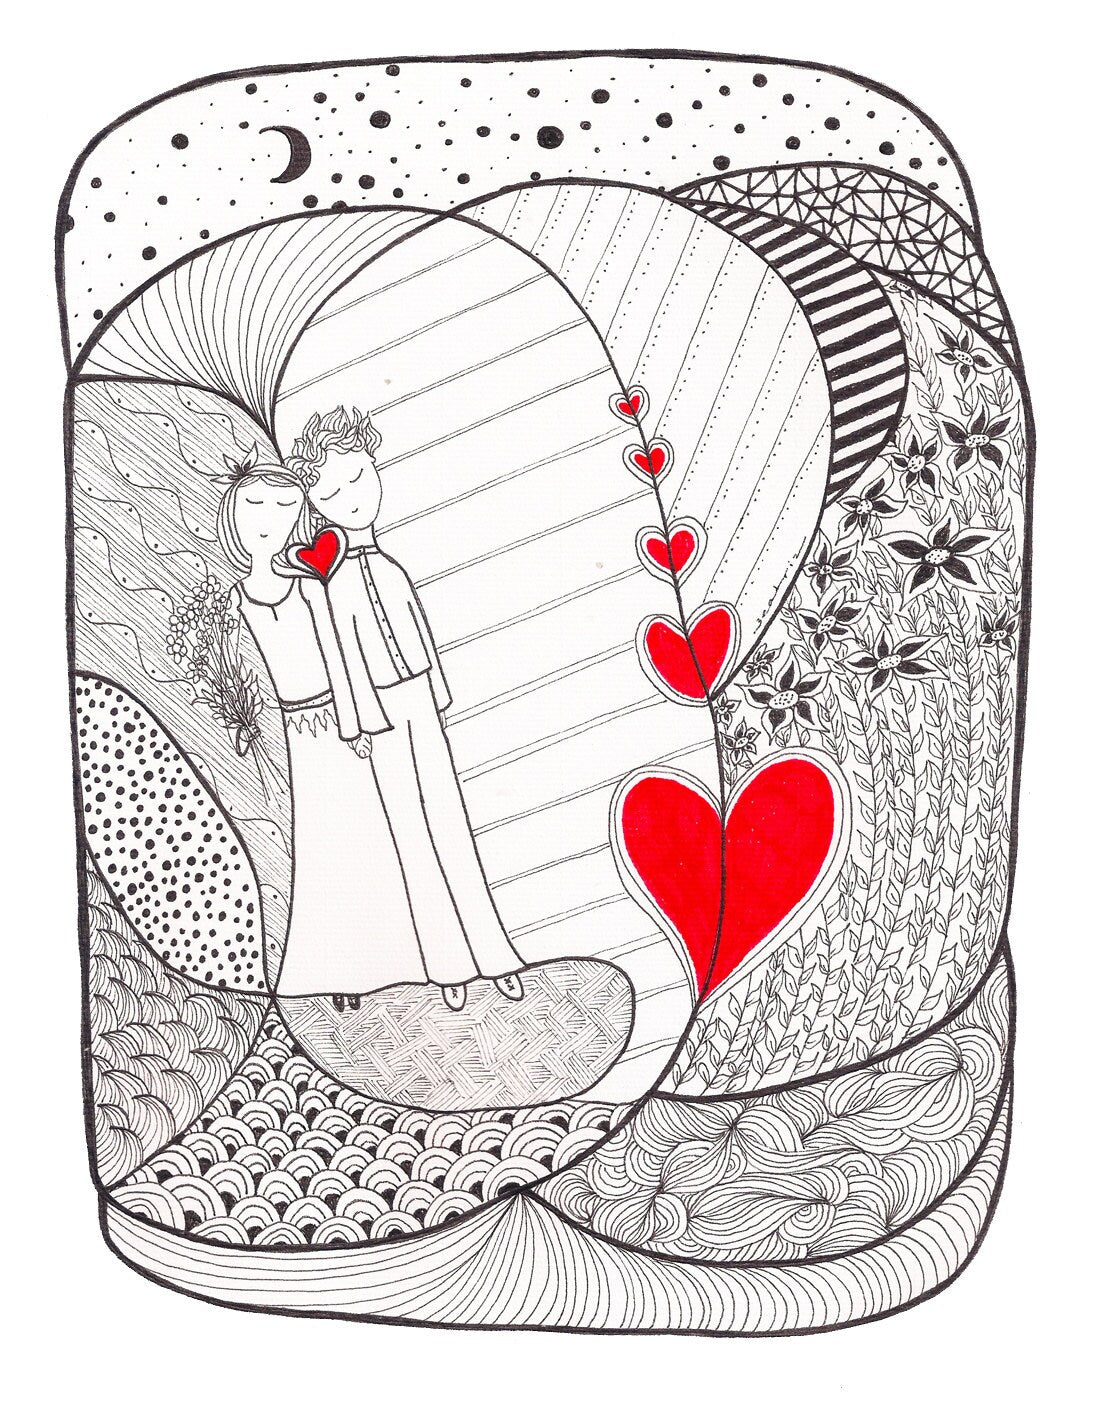 Lovers in a dream - Art print